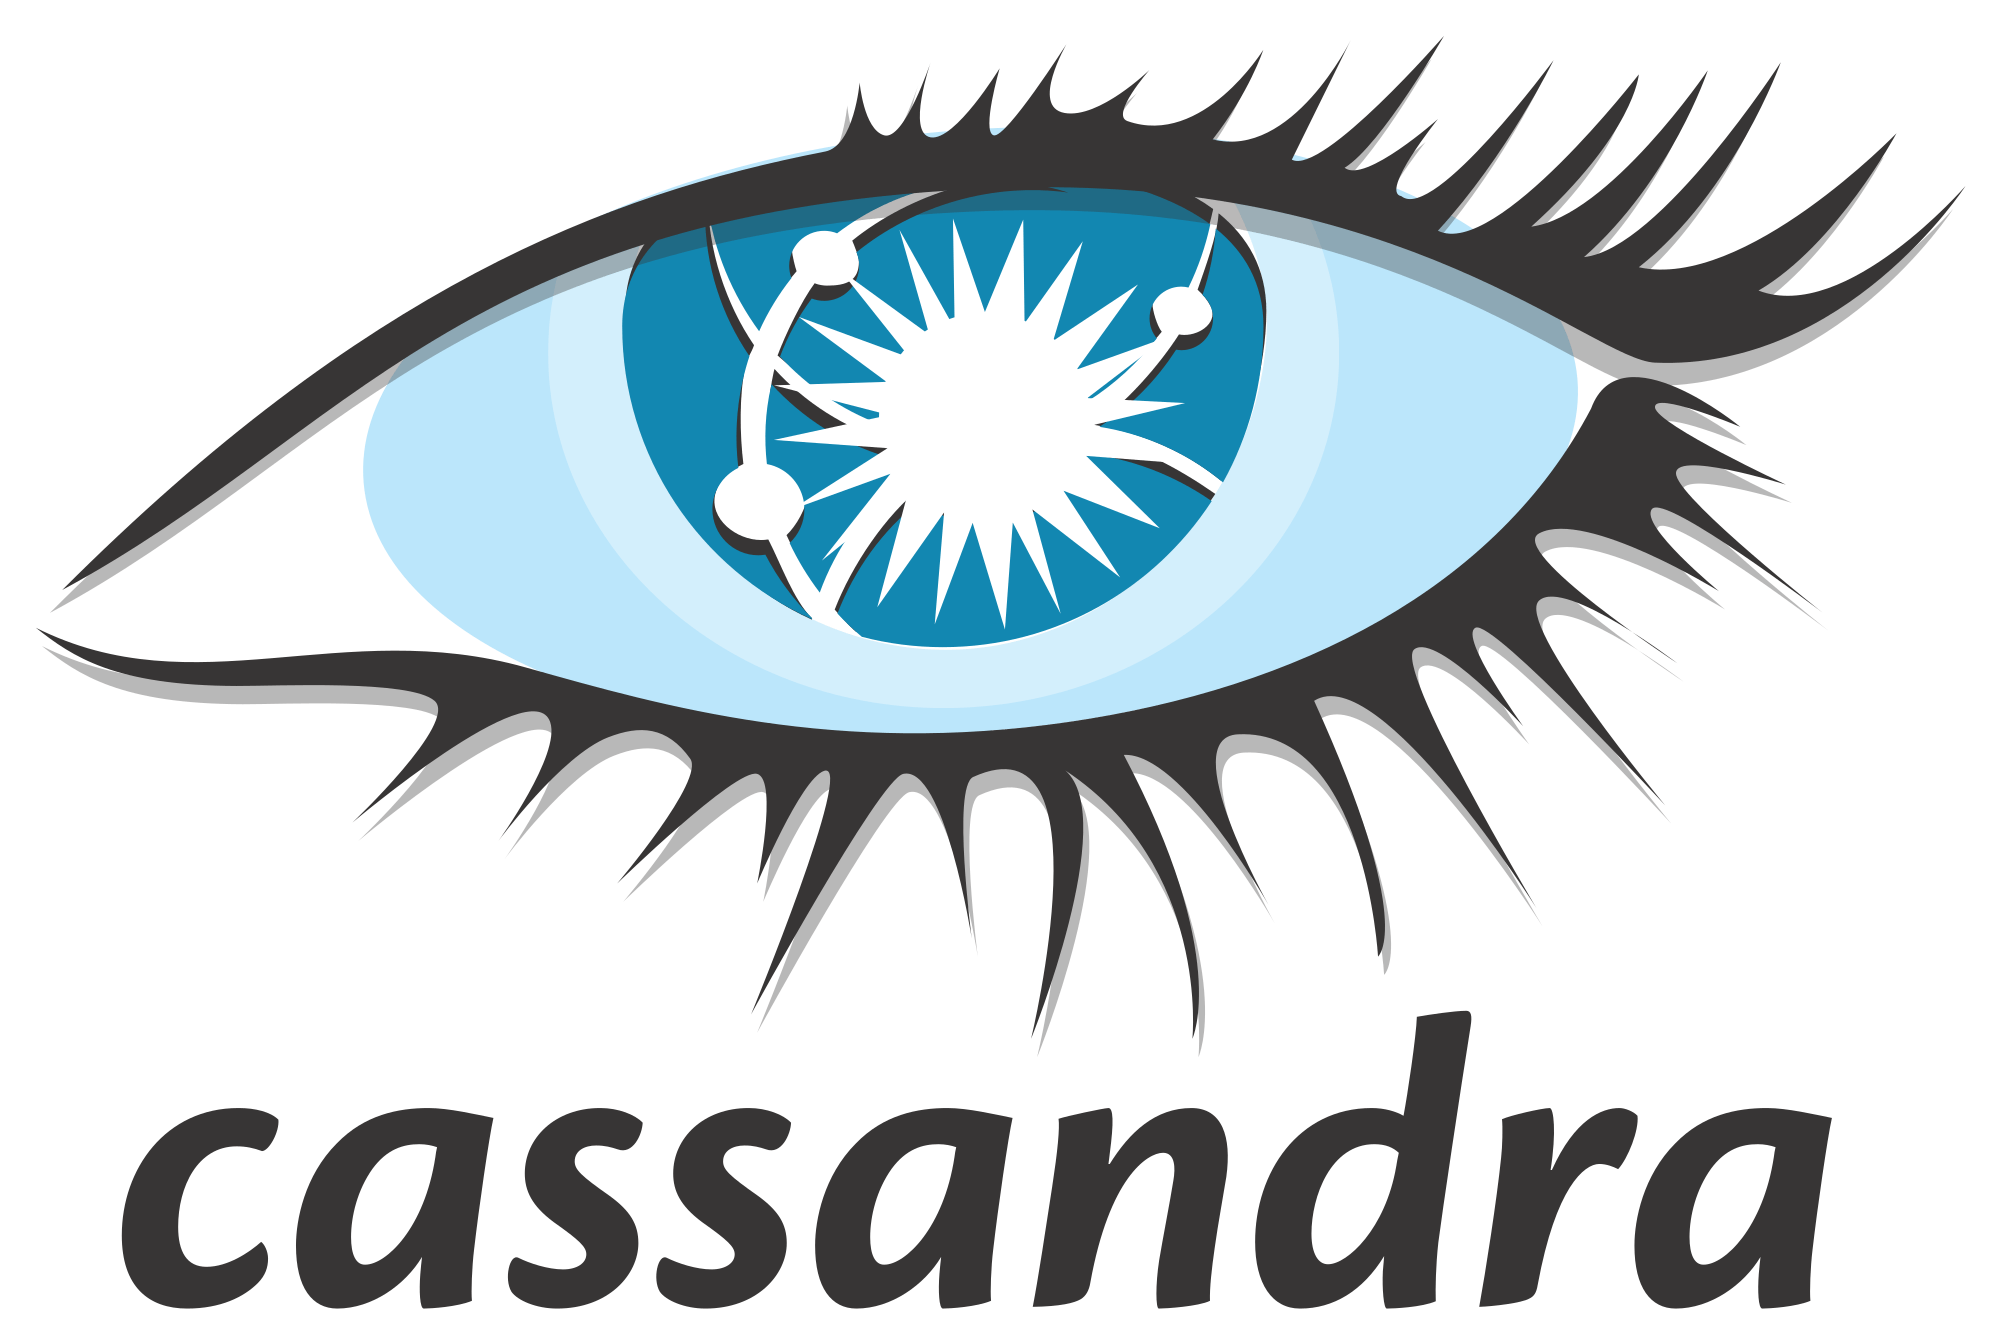 Cassandra Logo - File:Cassandra logo.svg - Wikimedia Commons